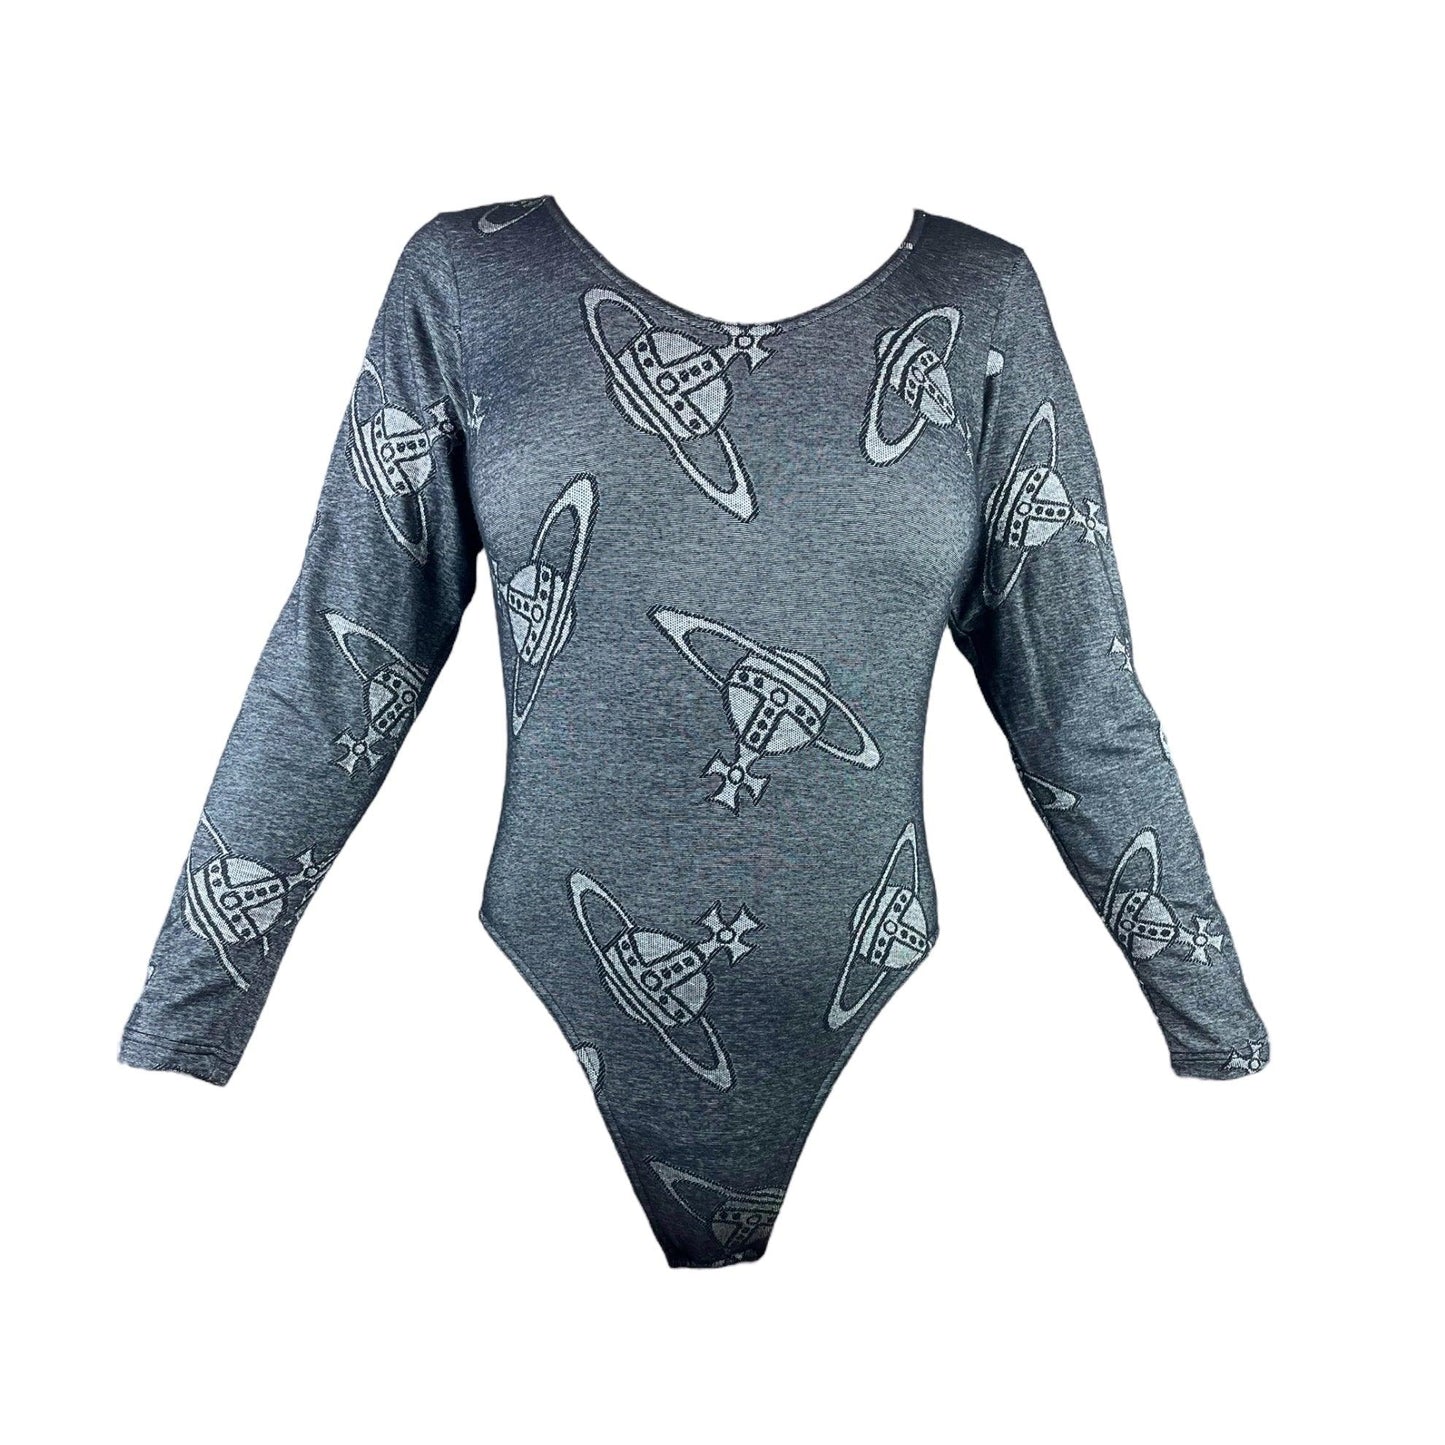 S/S 1992 Vivienne Westwood orb bodysuit - Known Source